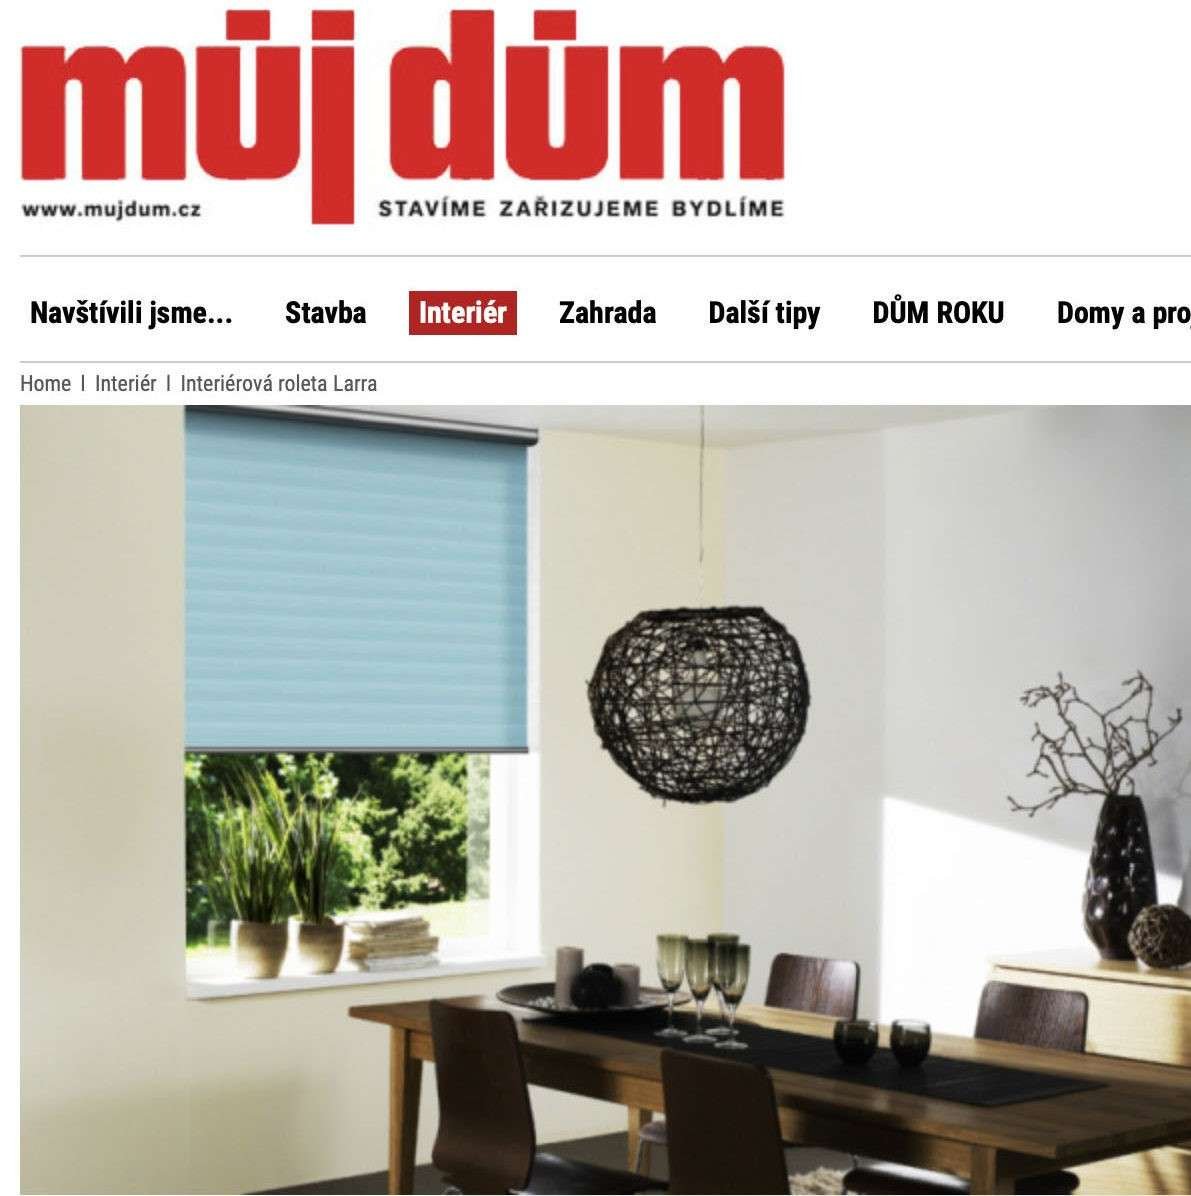 Miroslavo in Media: Mujdum.cz